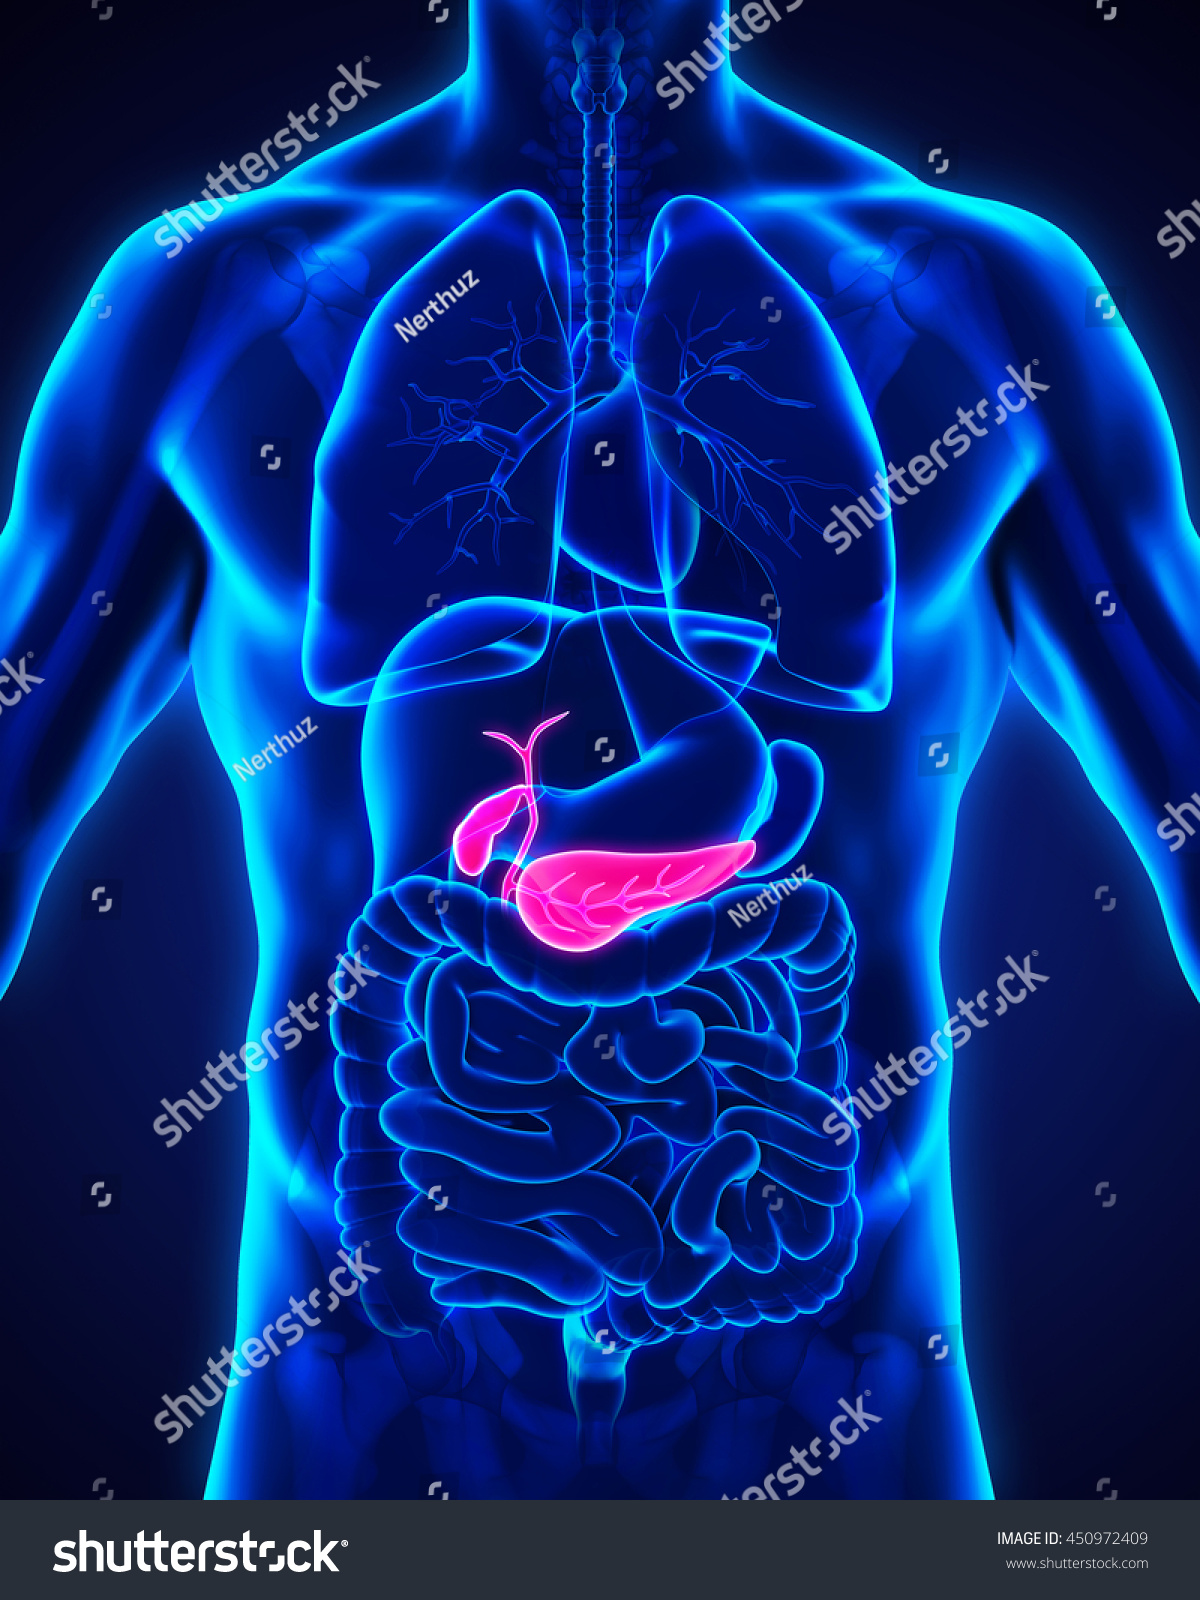 Human Gallbladder And Pancreas Anatomy Illustration. 3d Rendering ...